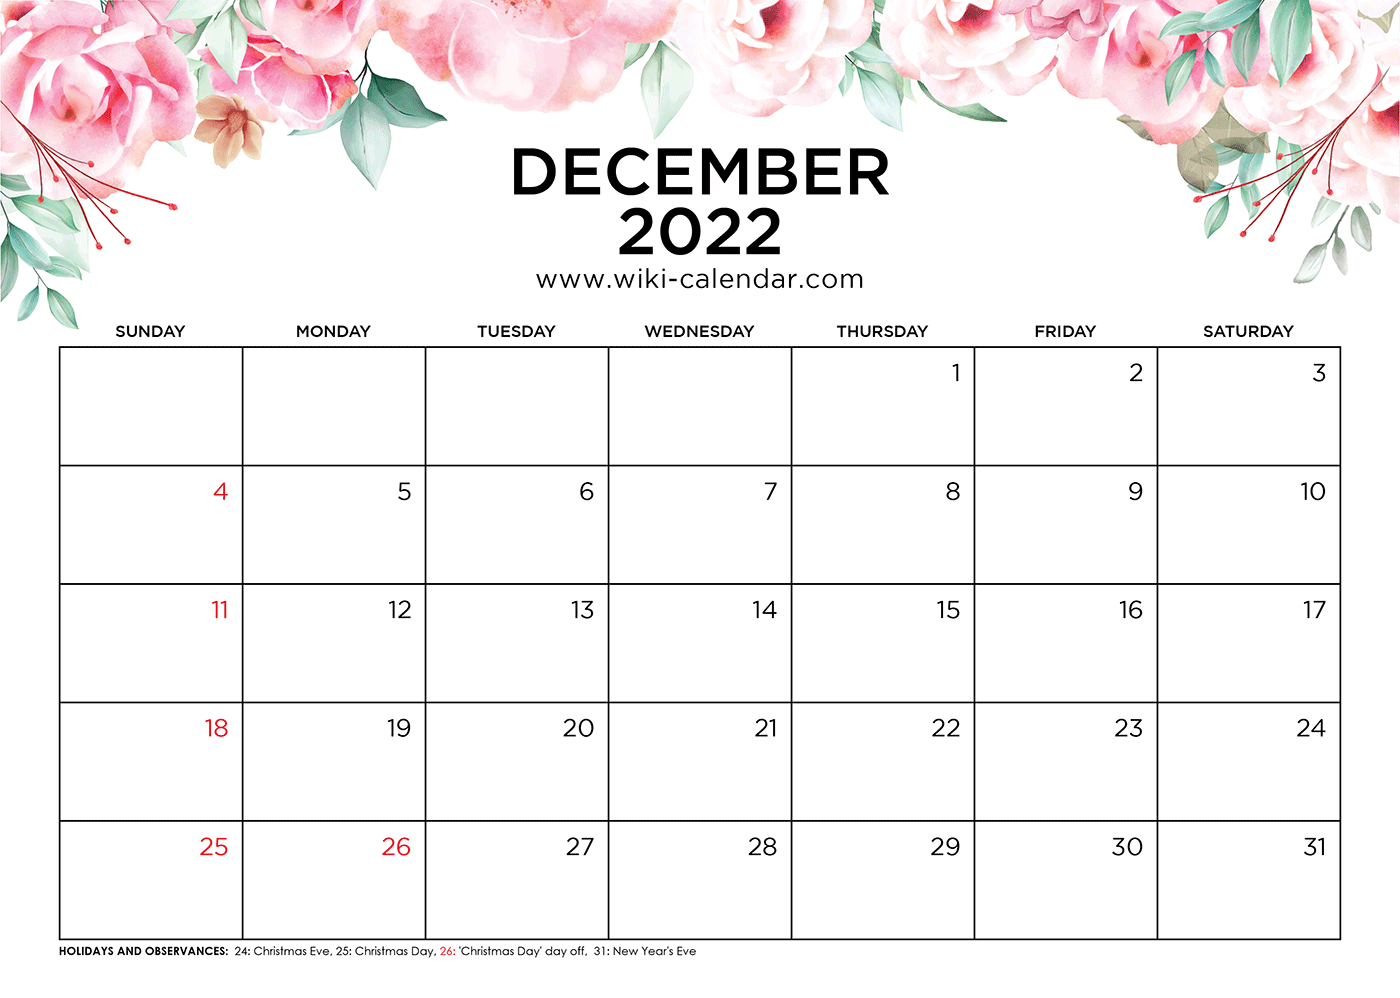 Decemberr 2022 Calendar Free Printable December 2022 Calendars - Wiki Calendar